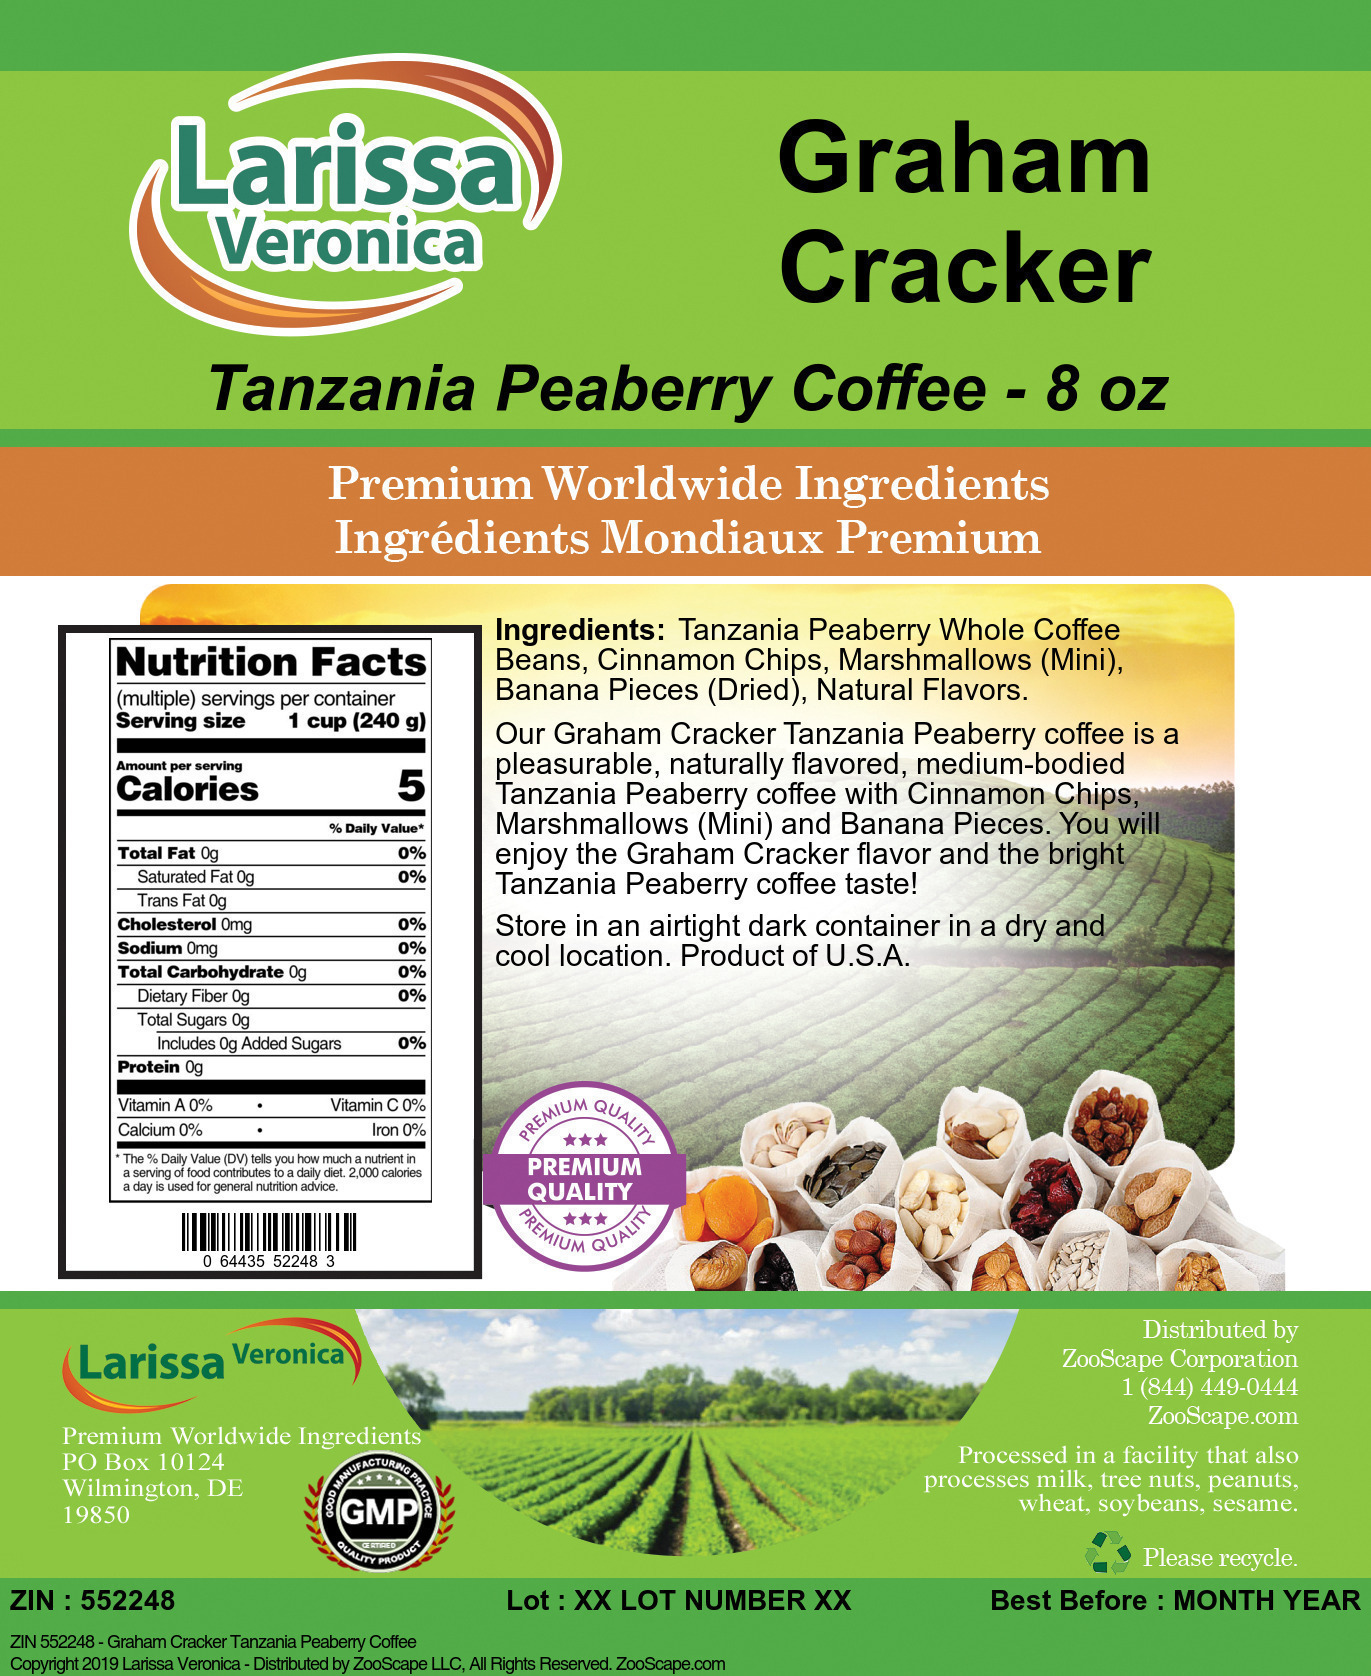 Graham Cracker Tanzania Peaberry Coffee - Label